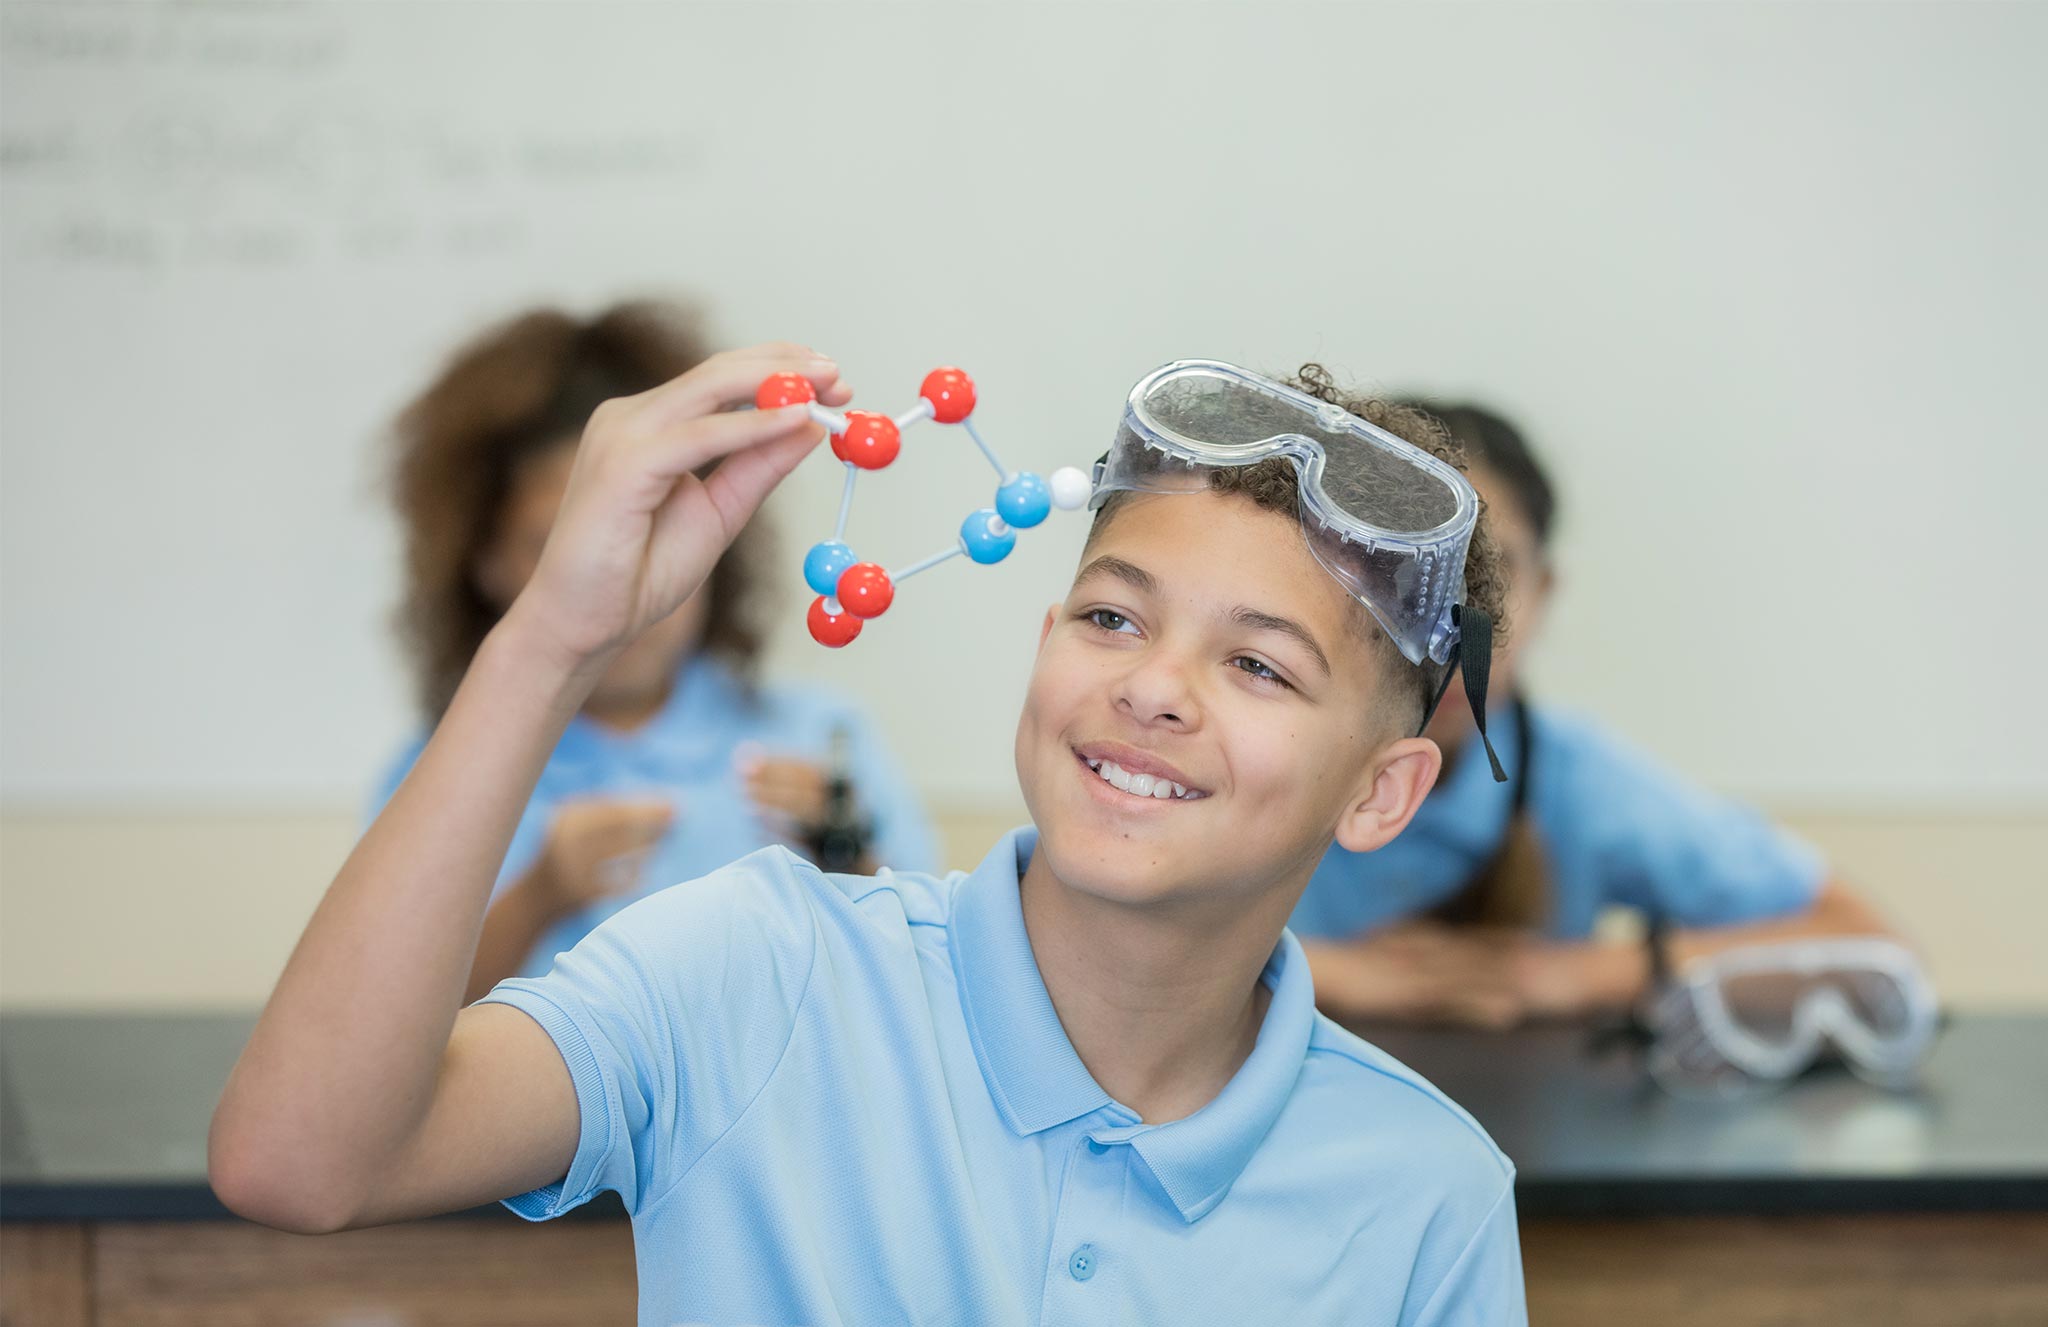 Boy holding model in science class